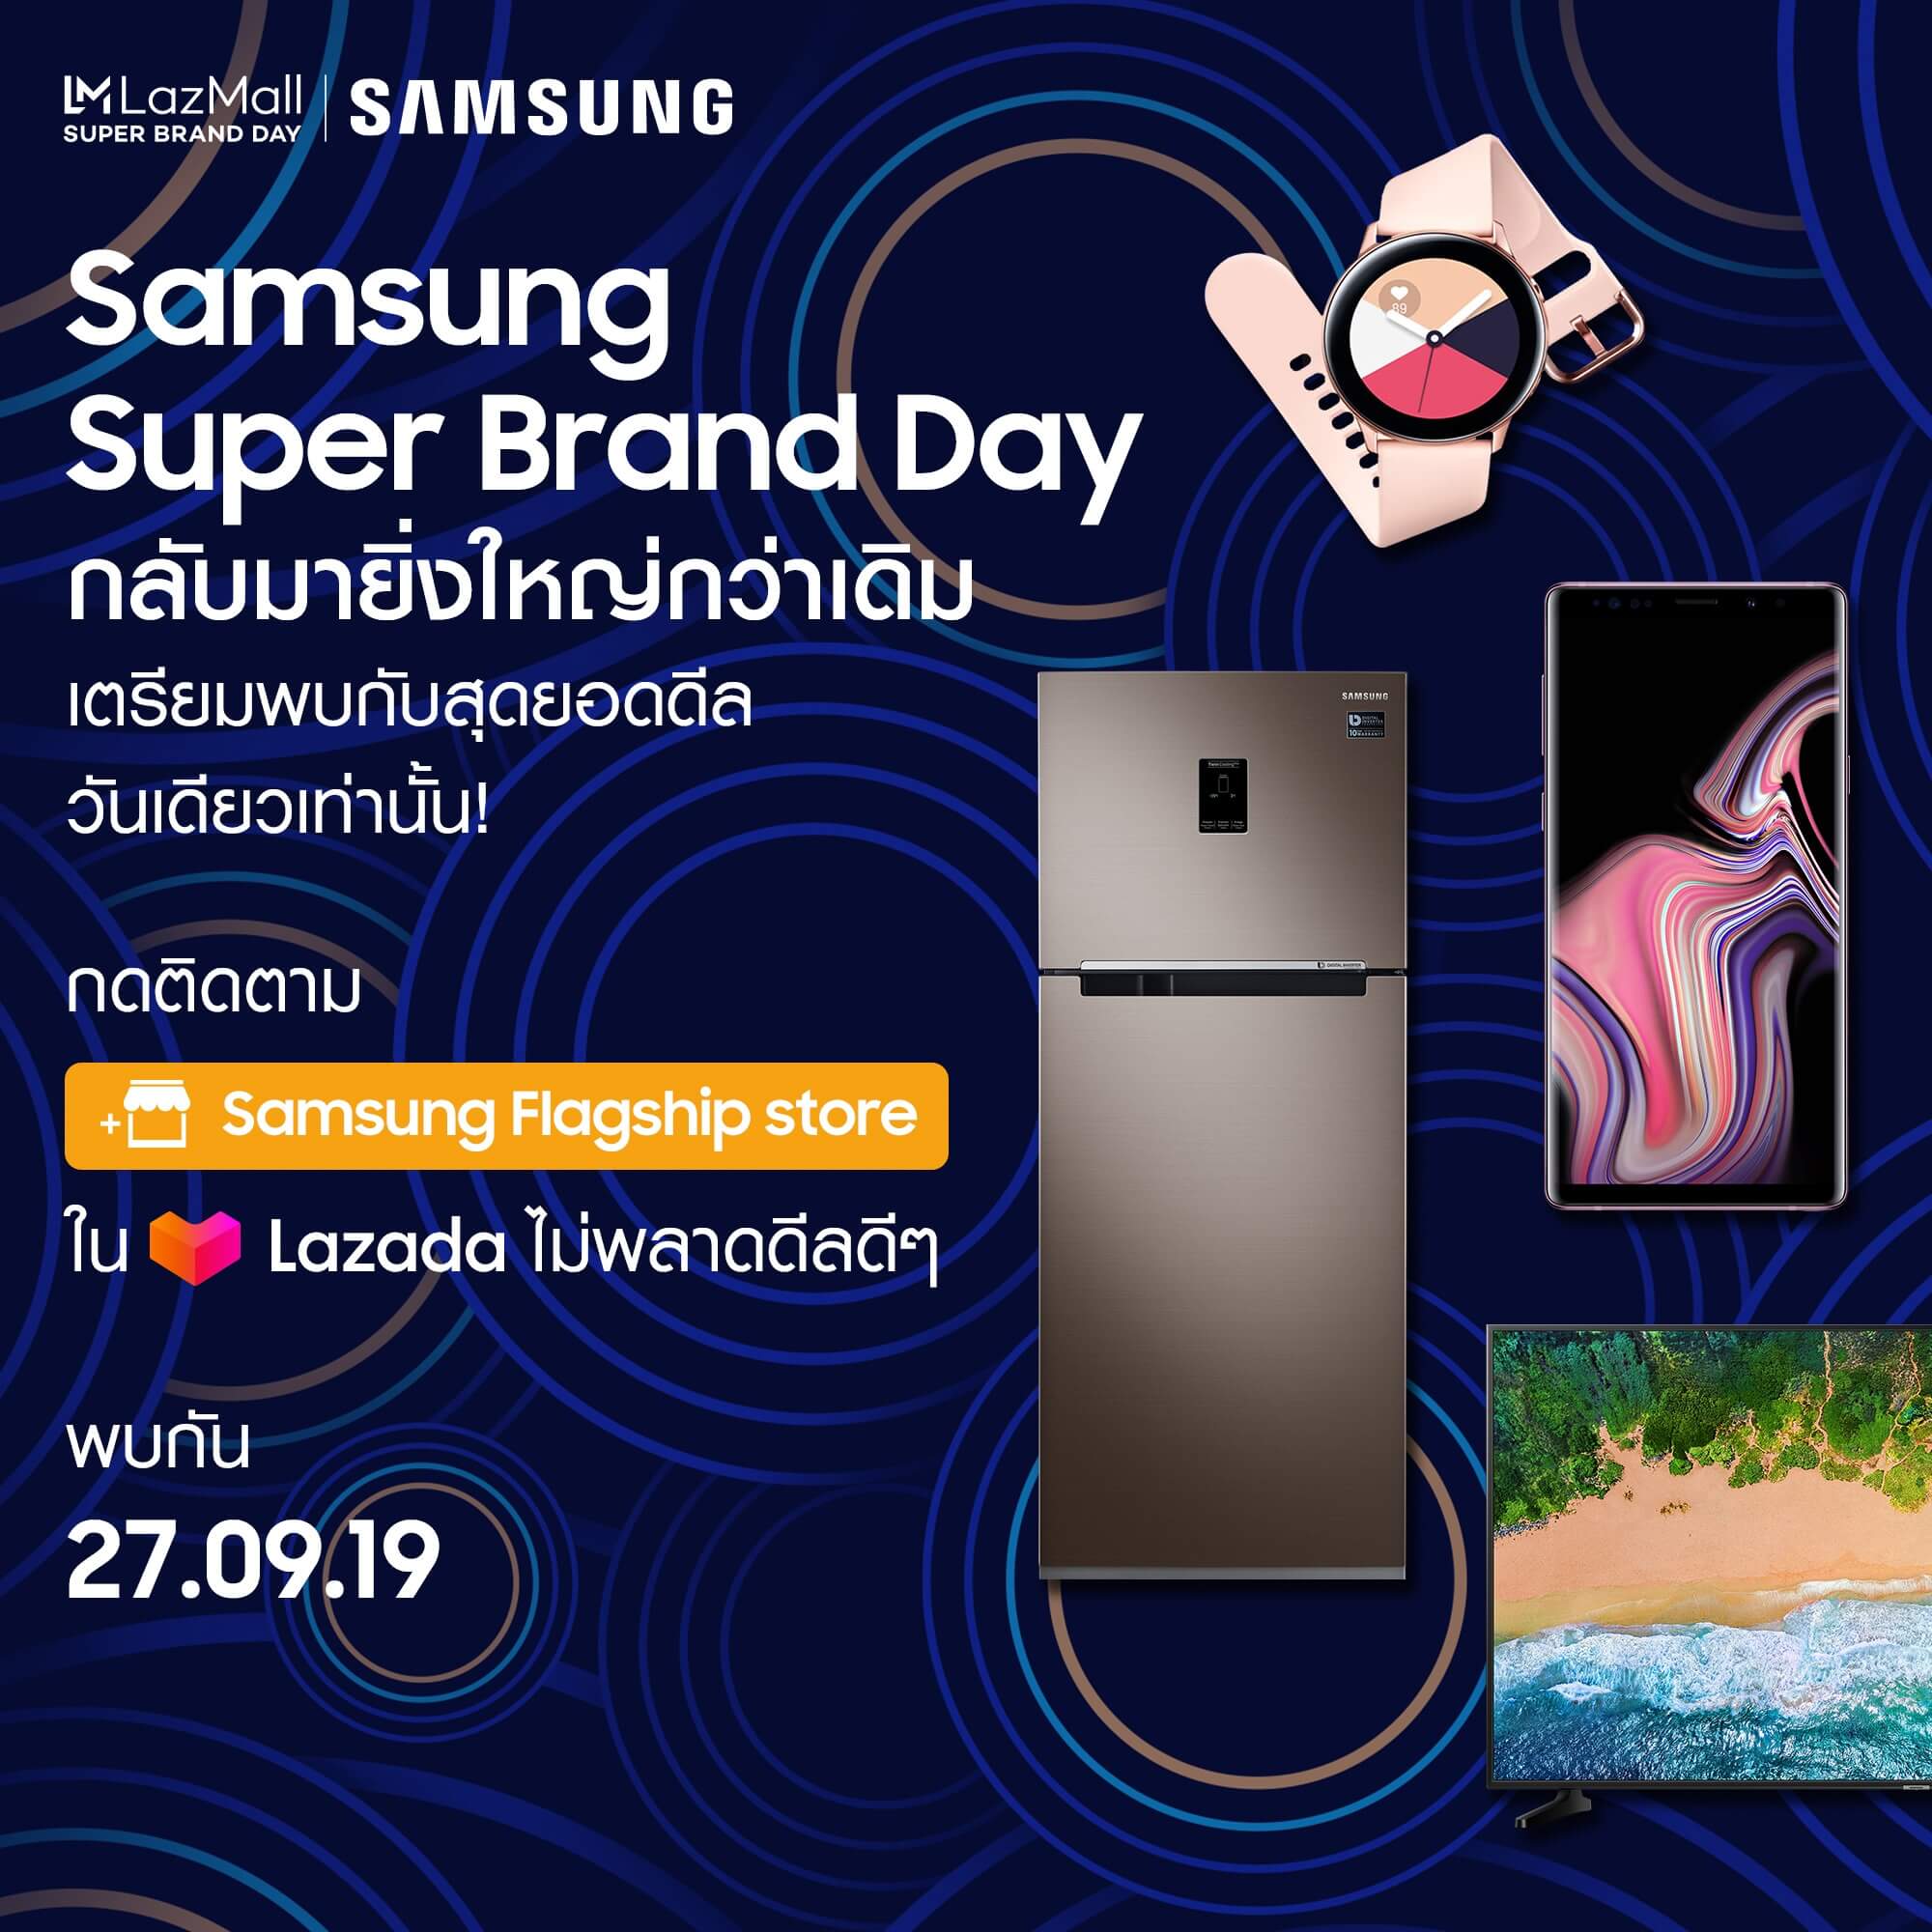 Samsung SuperBrandDay